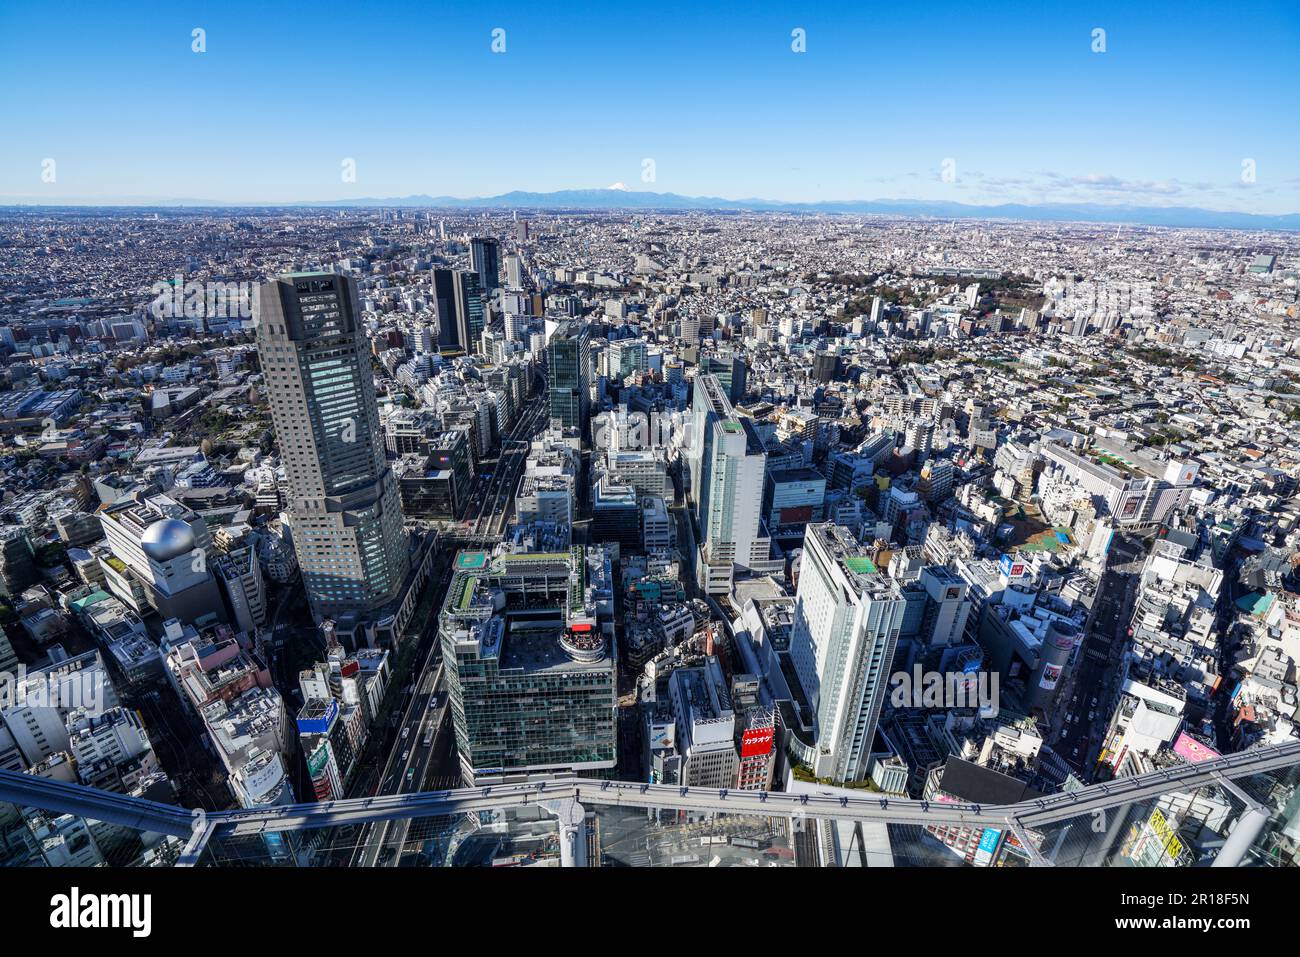 A bird's eye view of the city of Shibuya, Tokyo Stock Photo